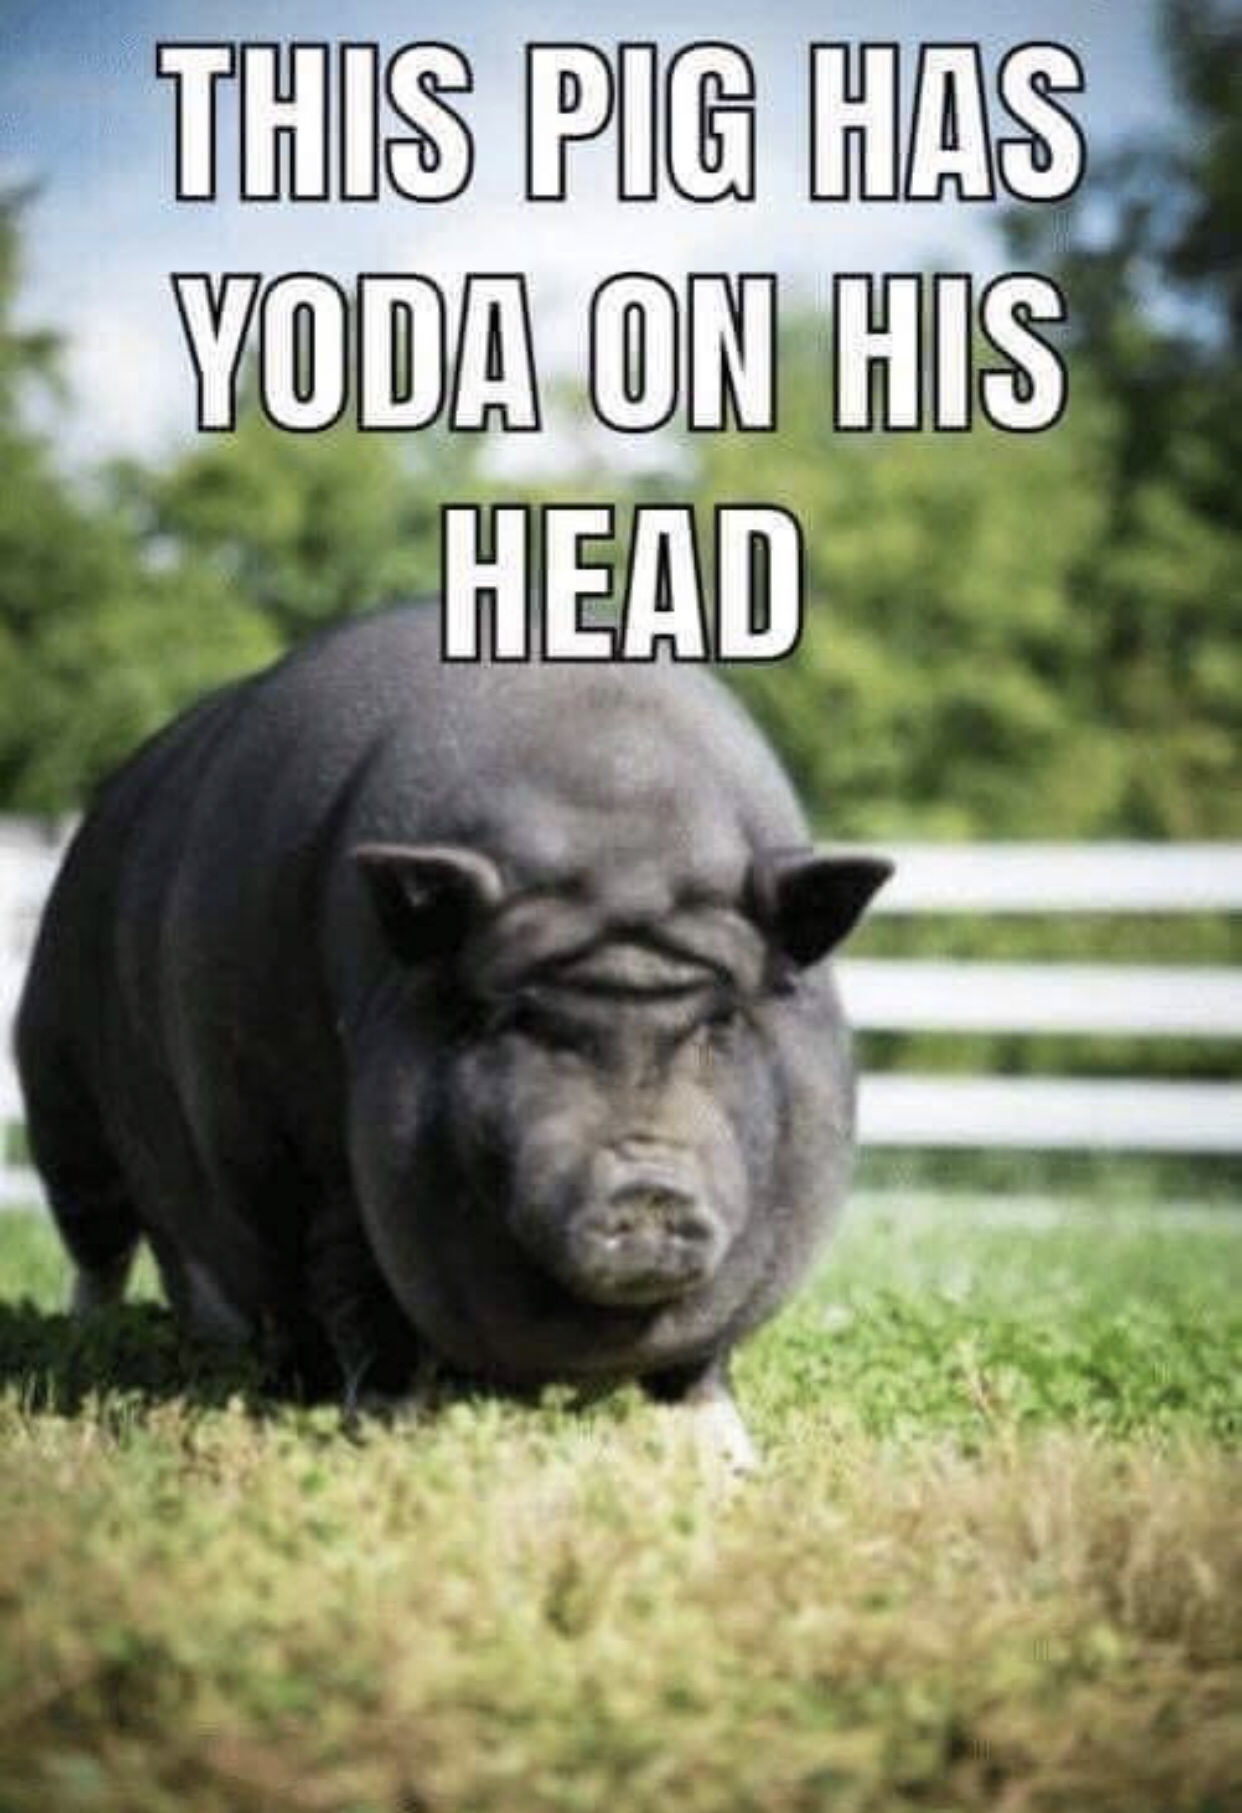 yoda pig - This Pig Has Yoda On His Head